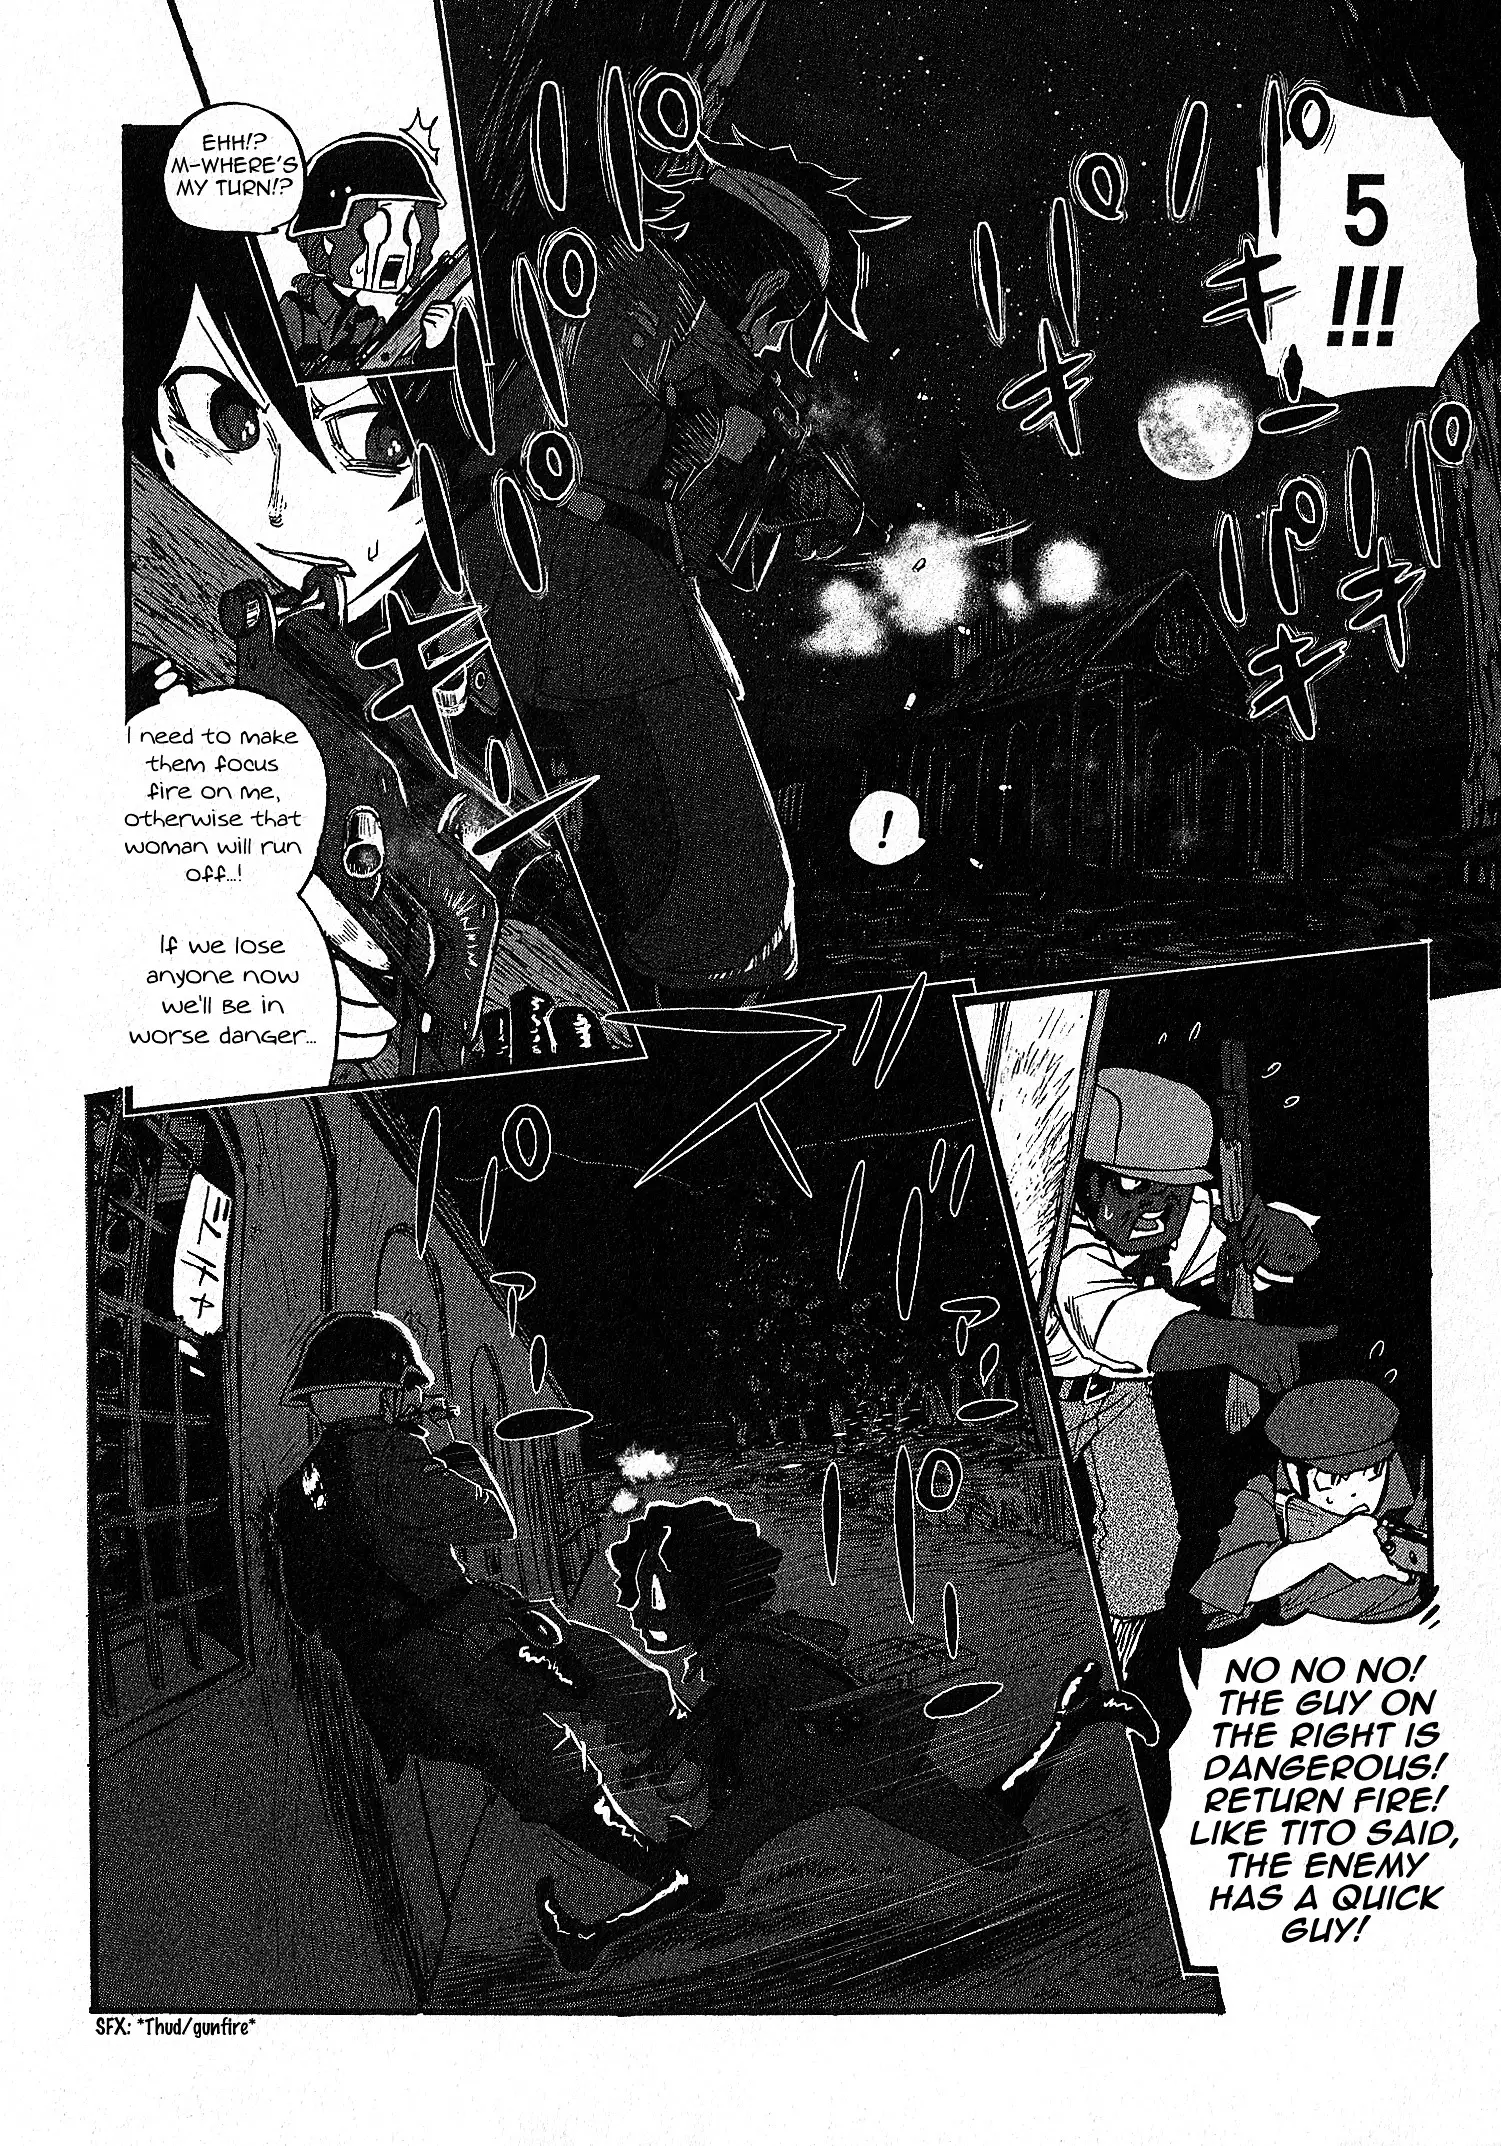 Groundless - Sekigan No Sogekihei - 11 page 17-7e3f78e6